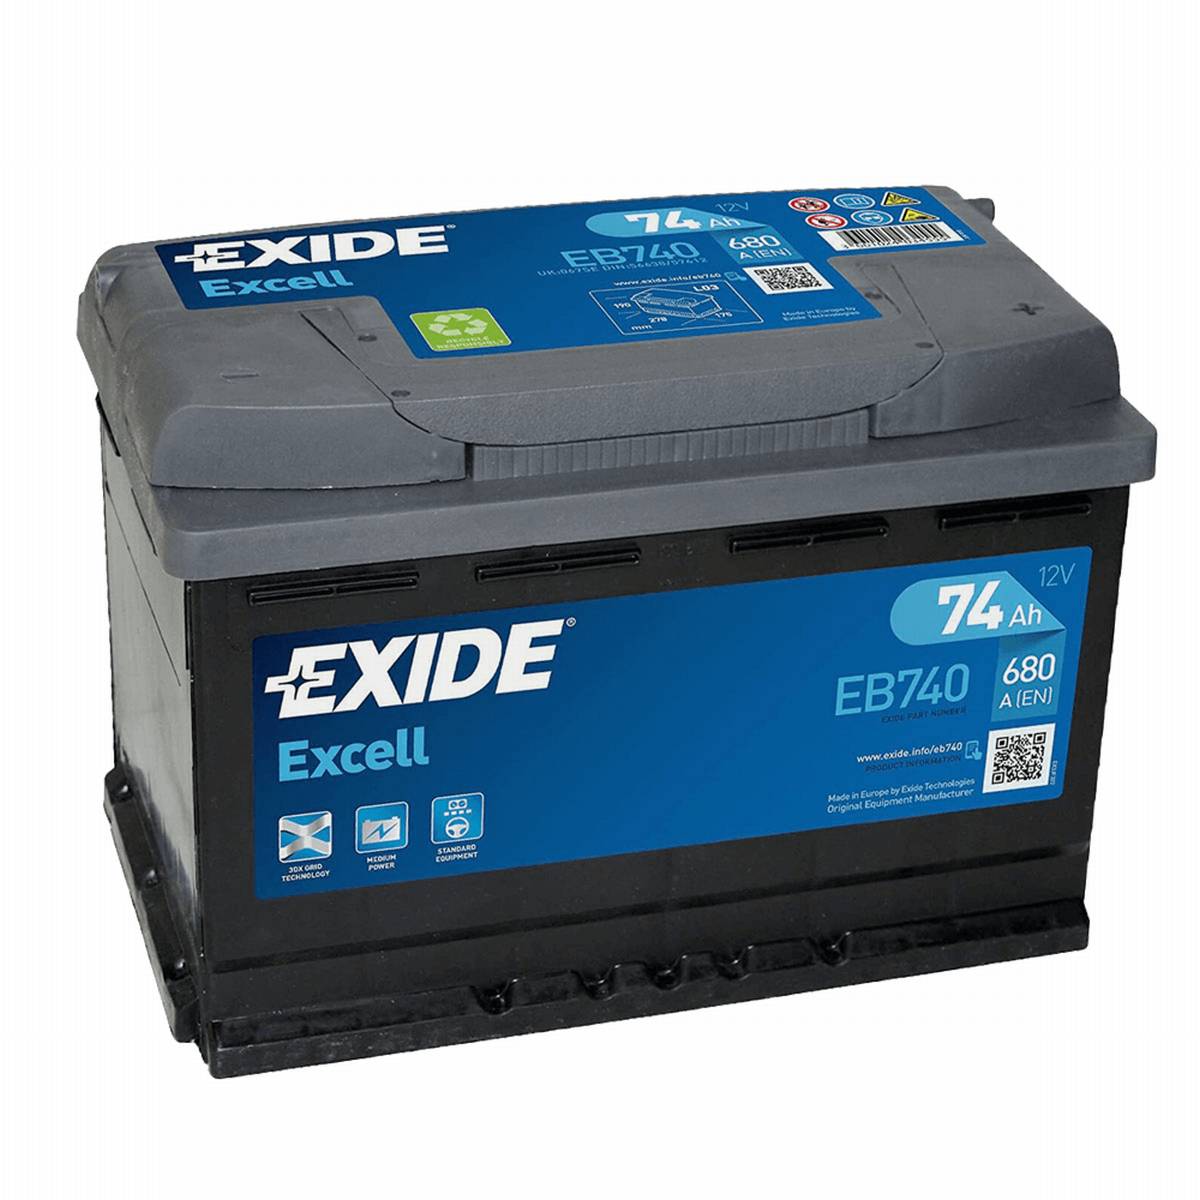 Batteria per auto Exide EB740 Excell 12V 74Ah 680A